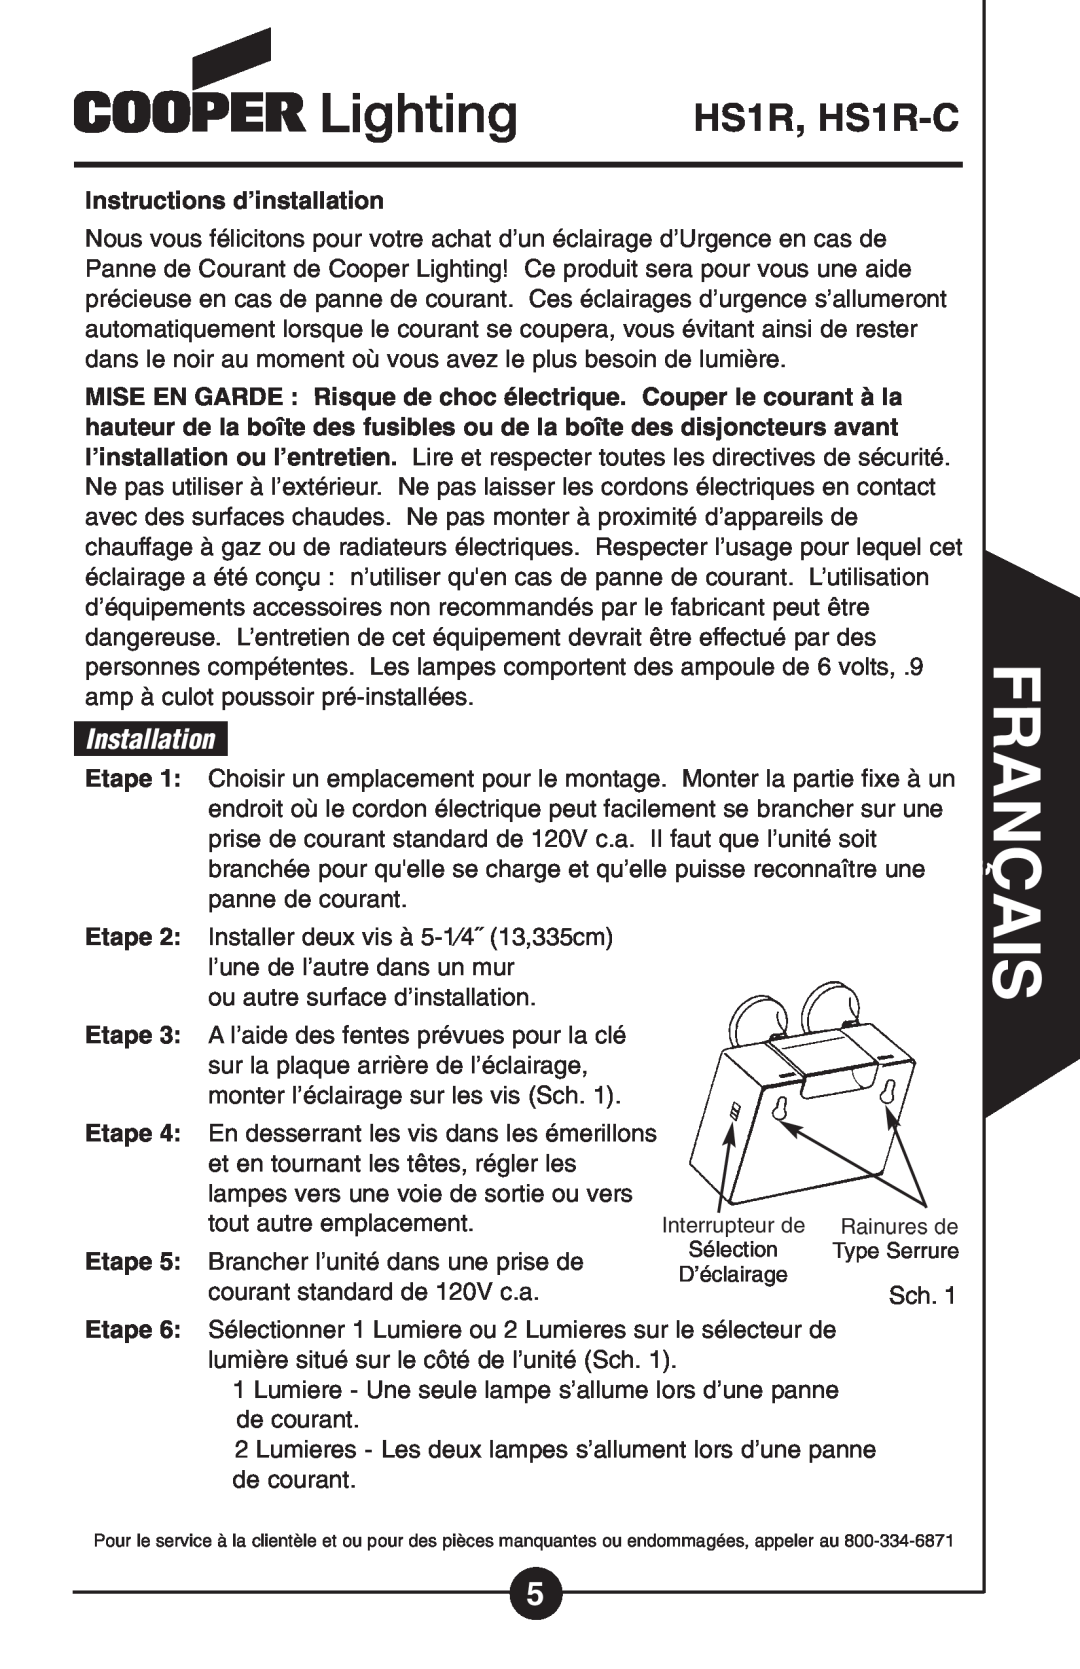 Cooper Lighting Hs 1r instruction manual Français, HS1R, HS1R-C, Installation 